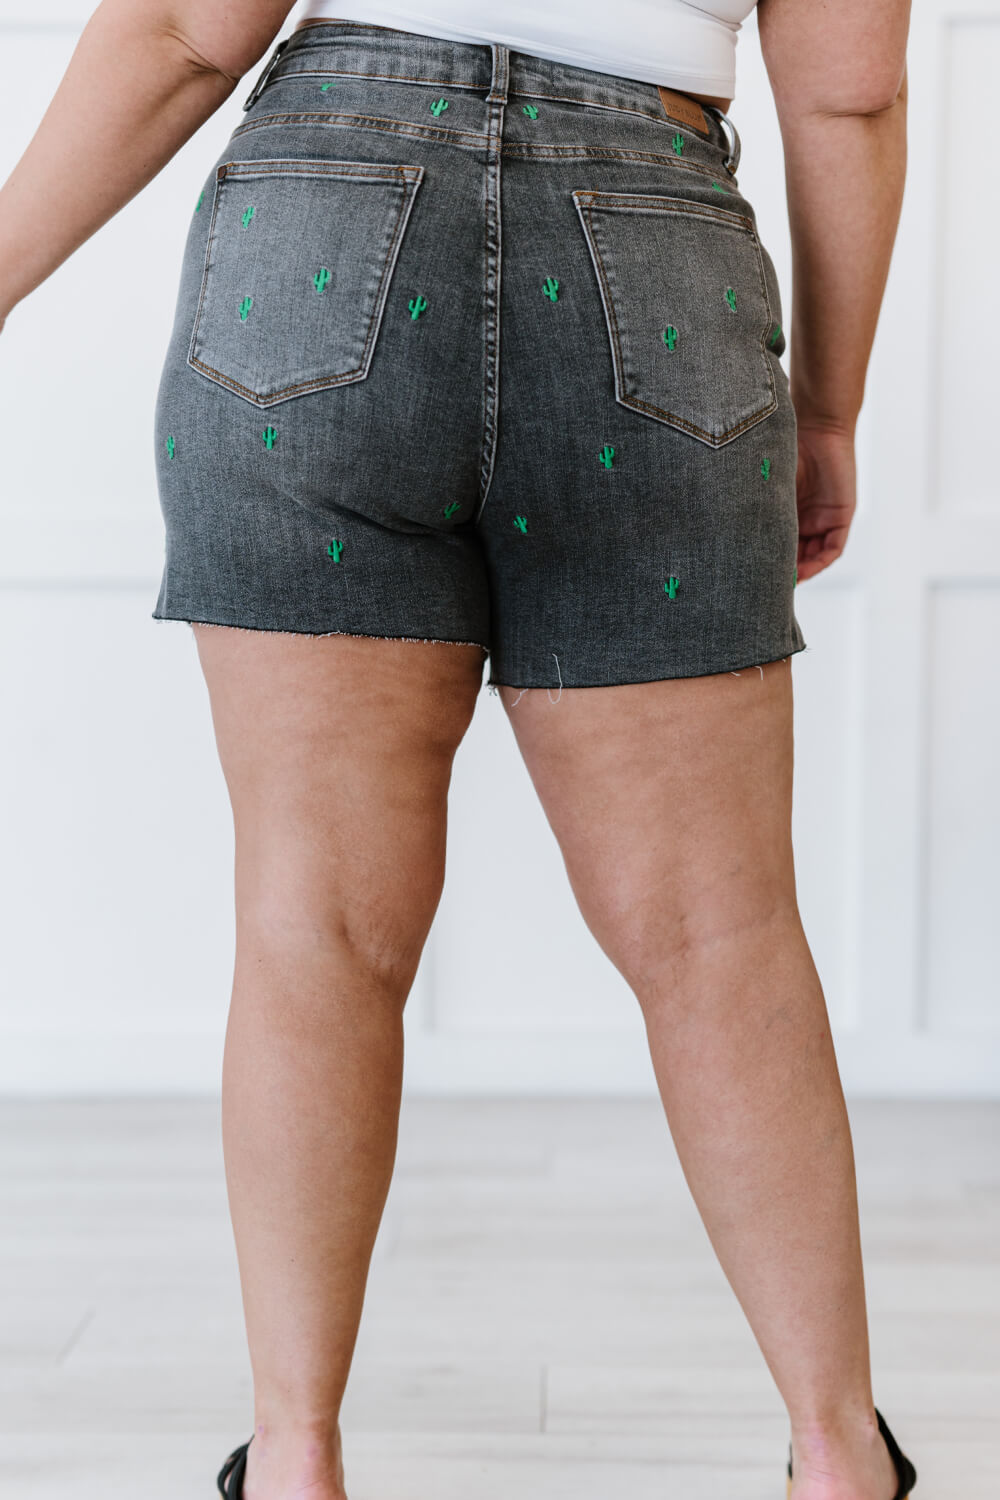 Saguaro Dreams Cactus Embroidered Shorts